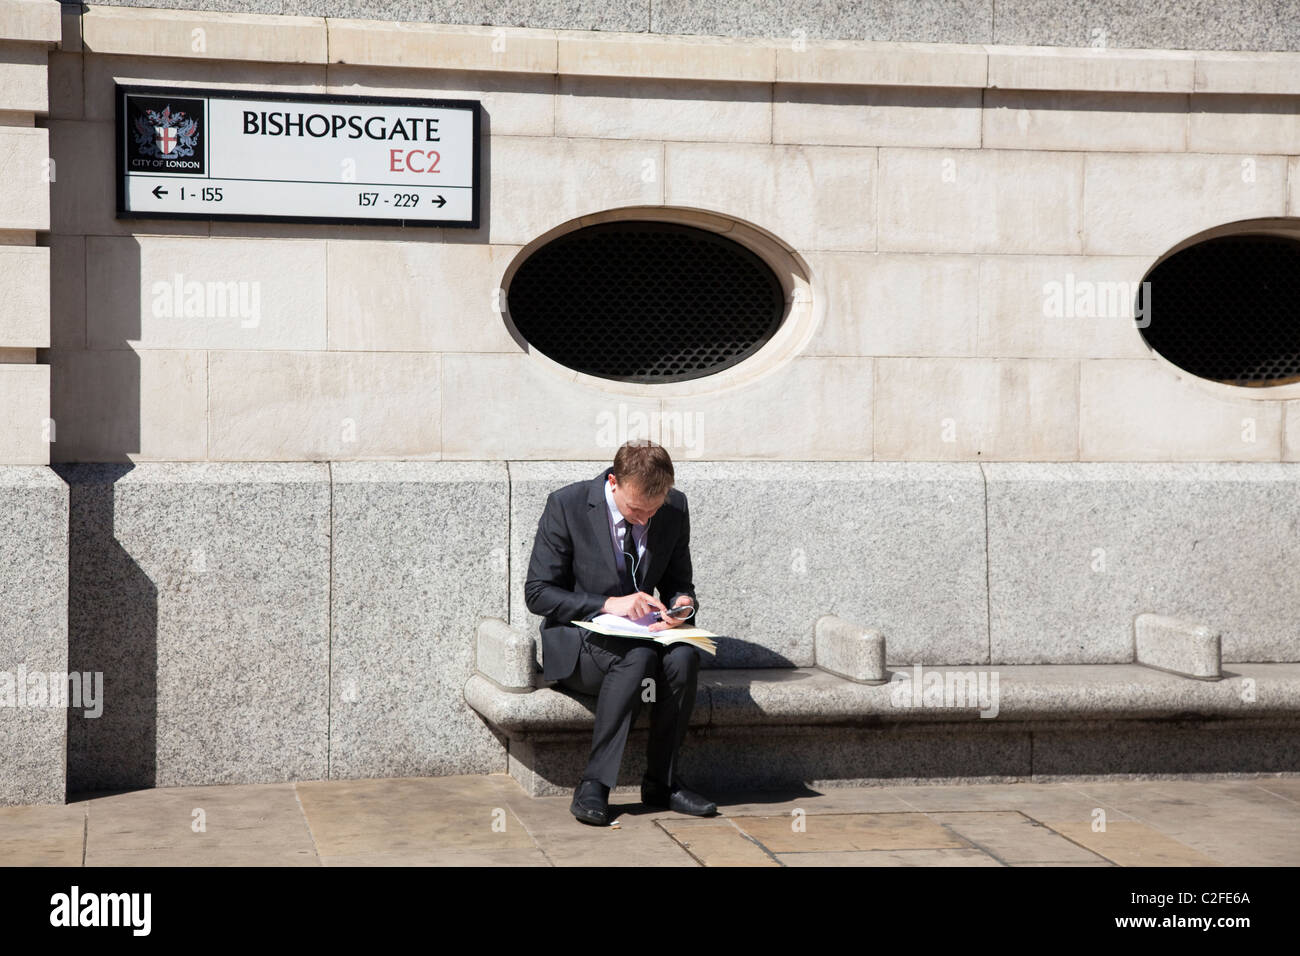 Man working outside in the sun, Bishopsgate, London, EC2, UK Stock Photo